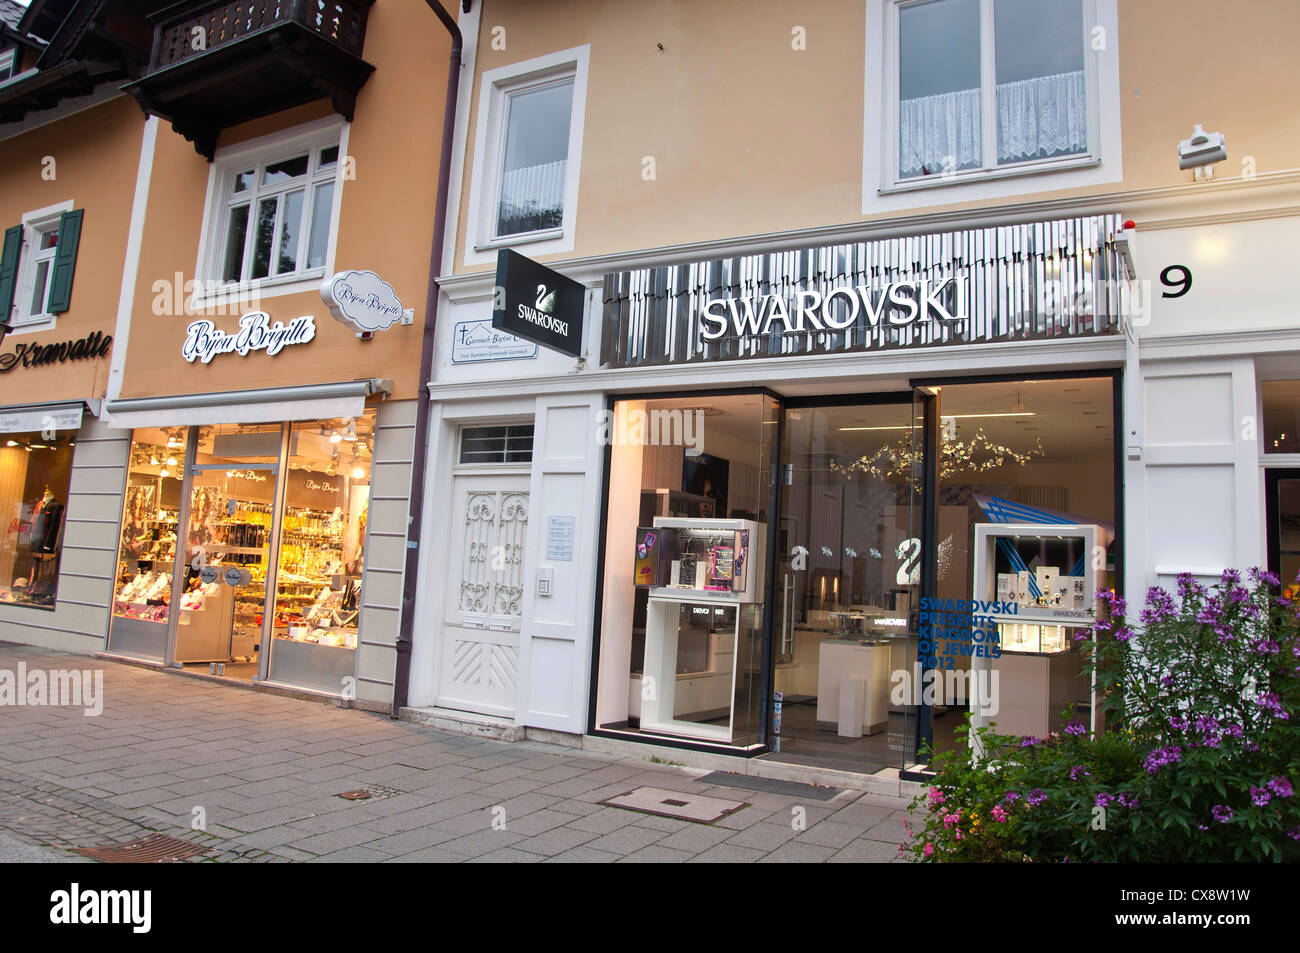 Swarovski store germany -Fotos und -Bildmaterial in hoher Auflösung – Alamy